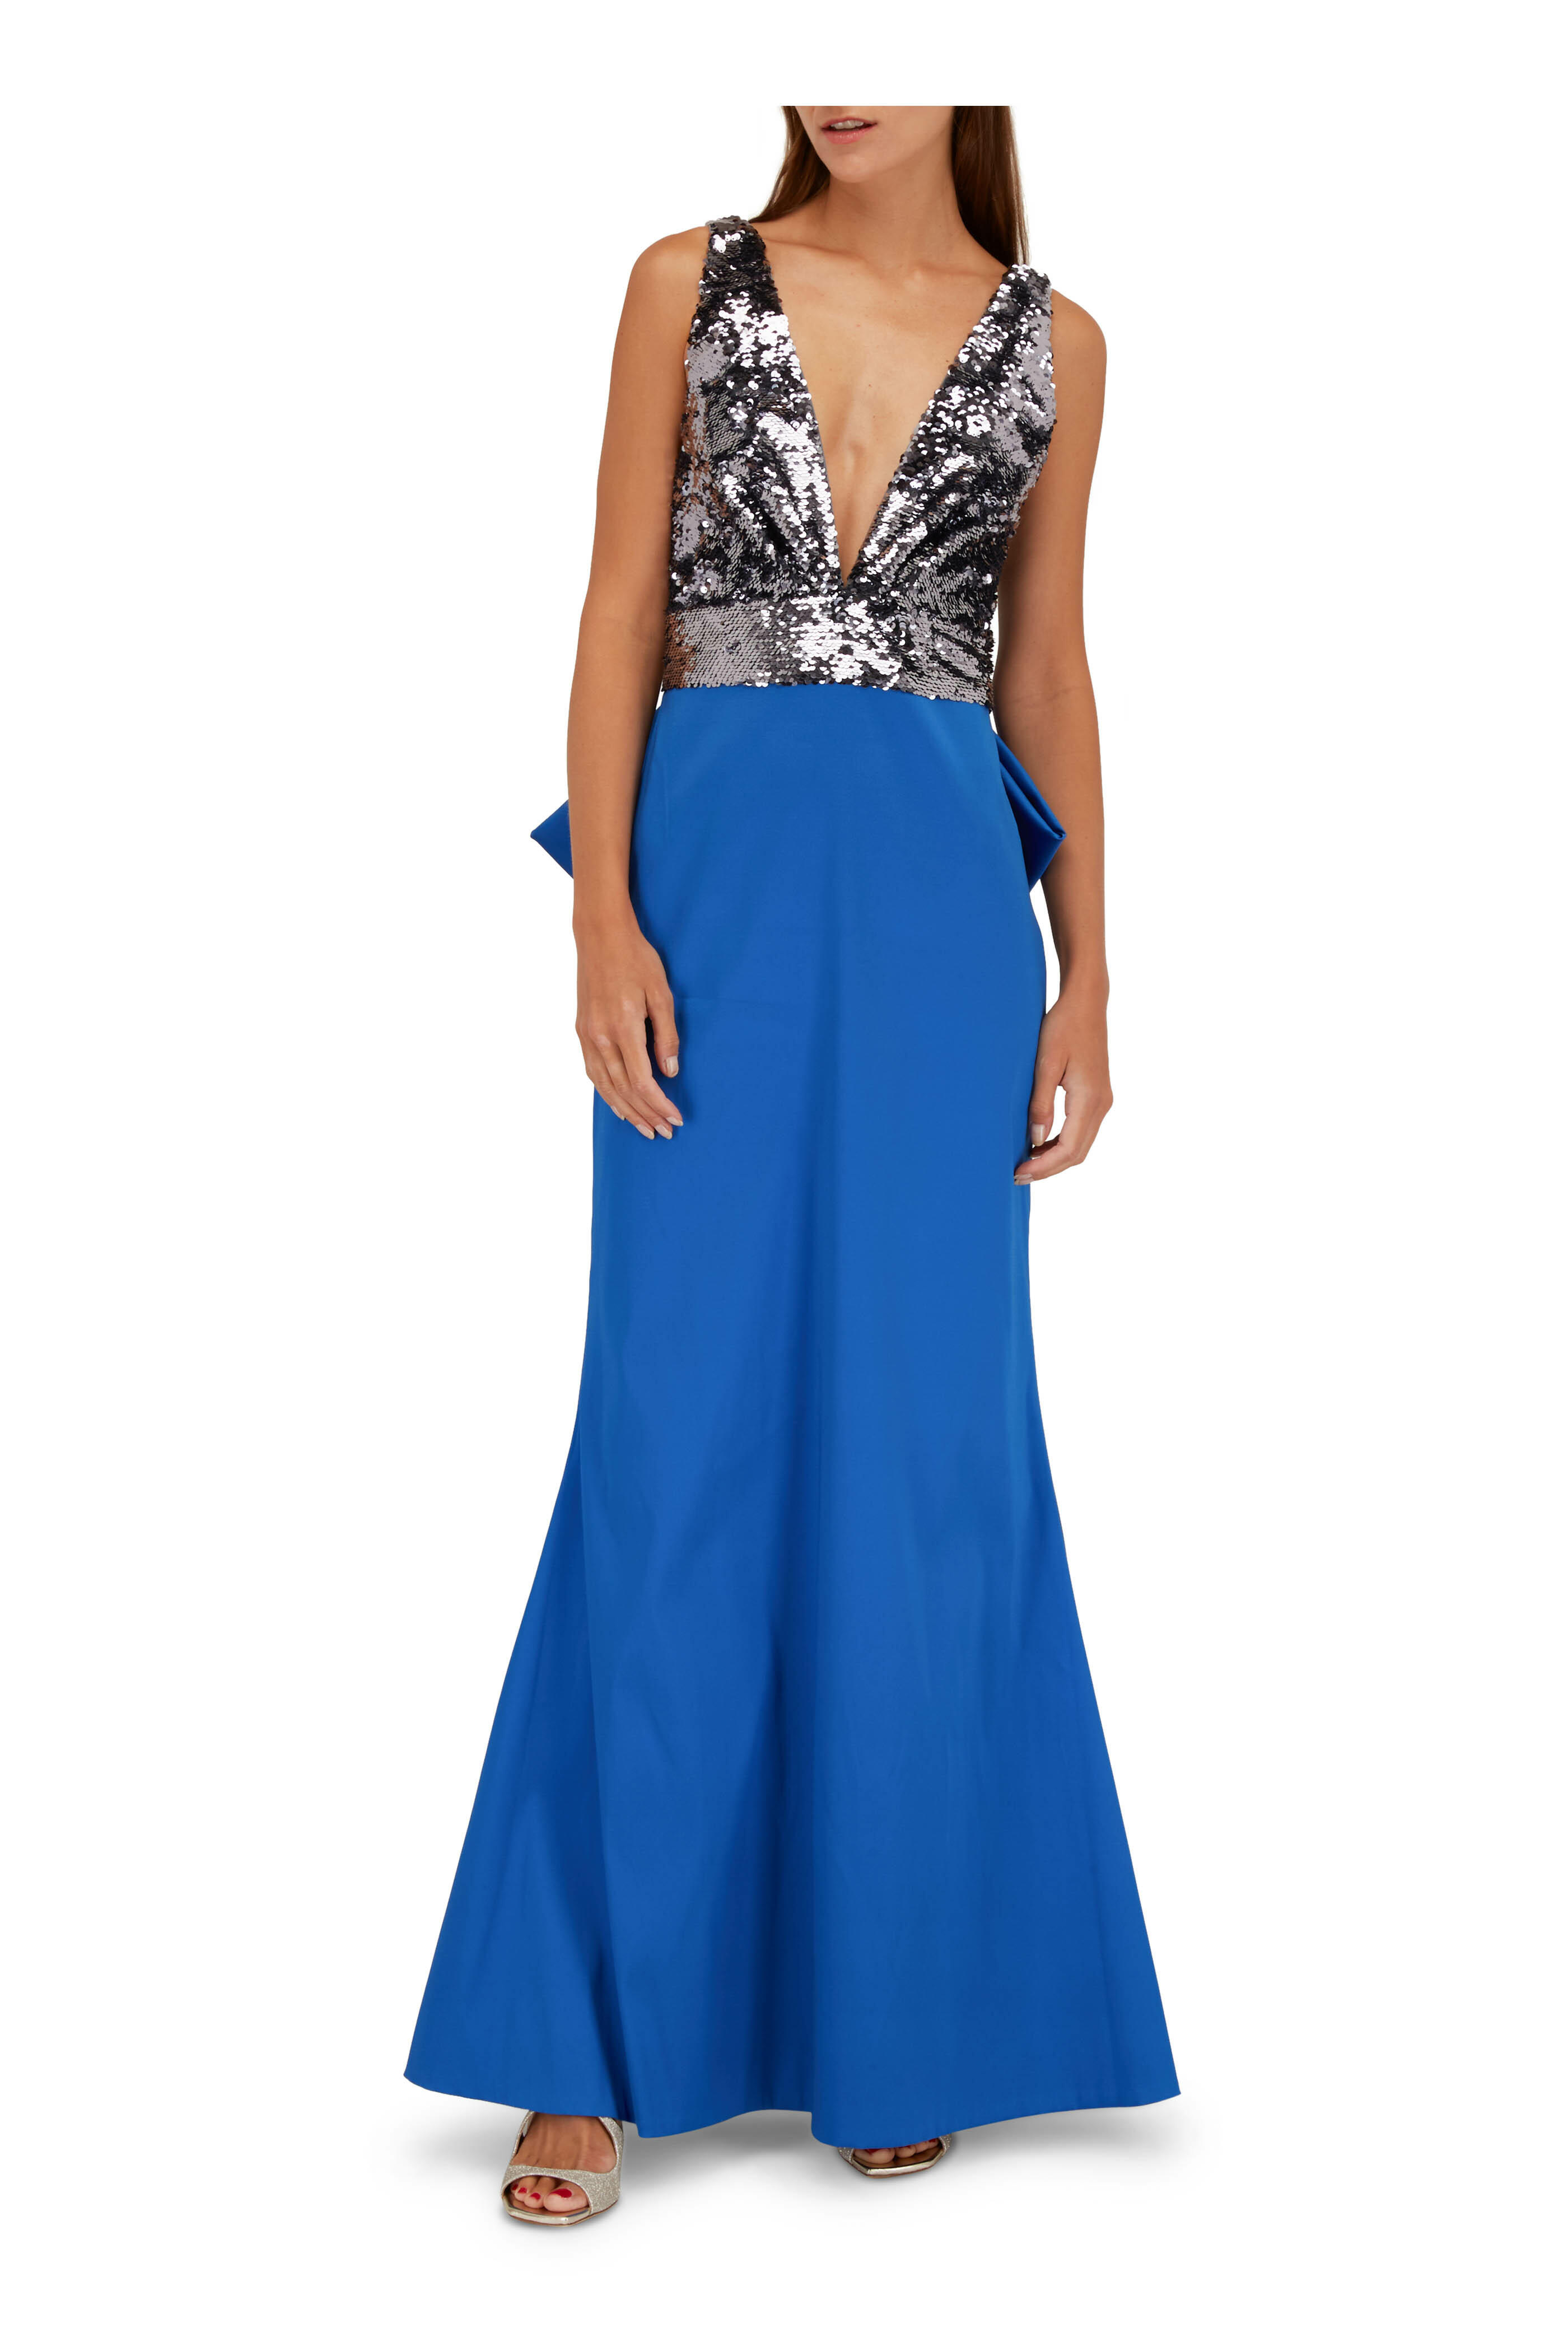 Sachin + Babi - Topanga Blue Sequin Gown | Mitchell Stores